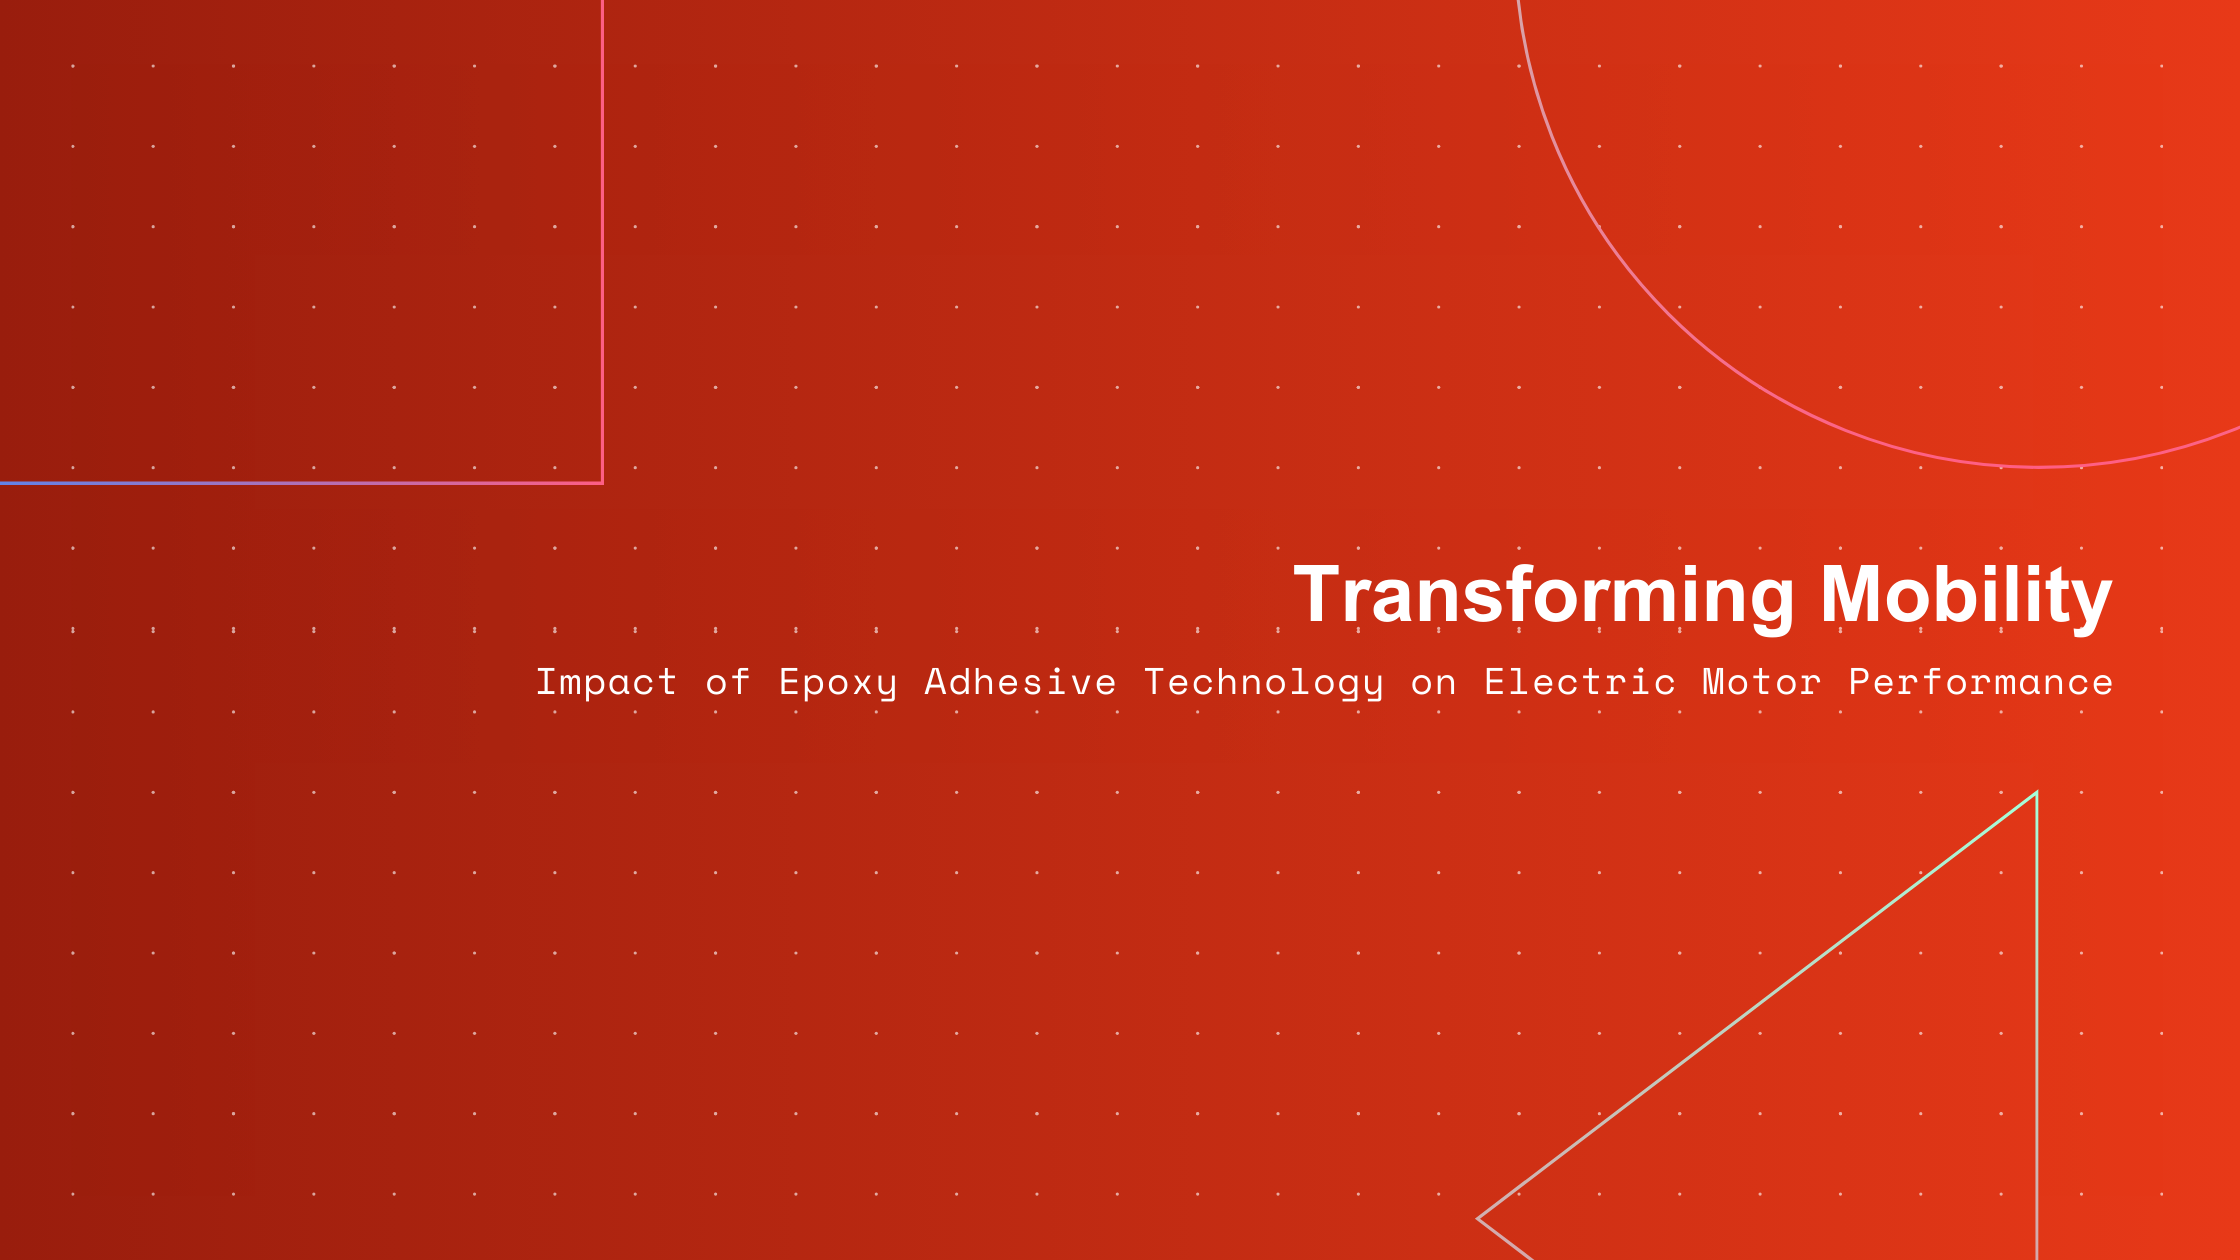 Epoxy Adhesive Technology: Transforming Electric Motor Performance